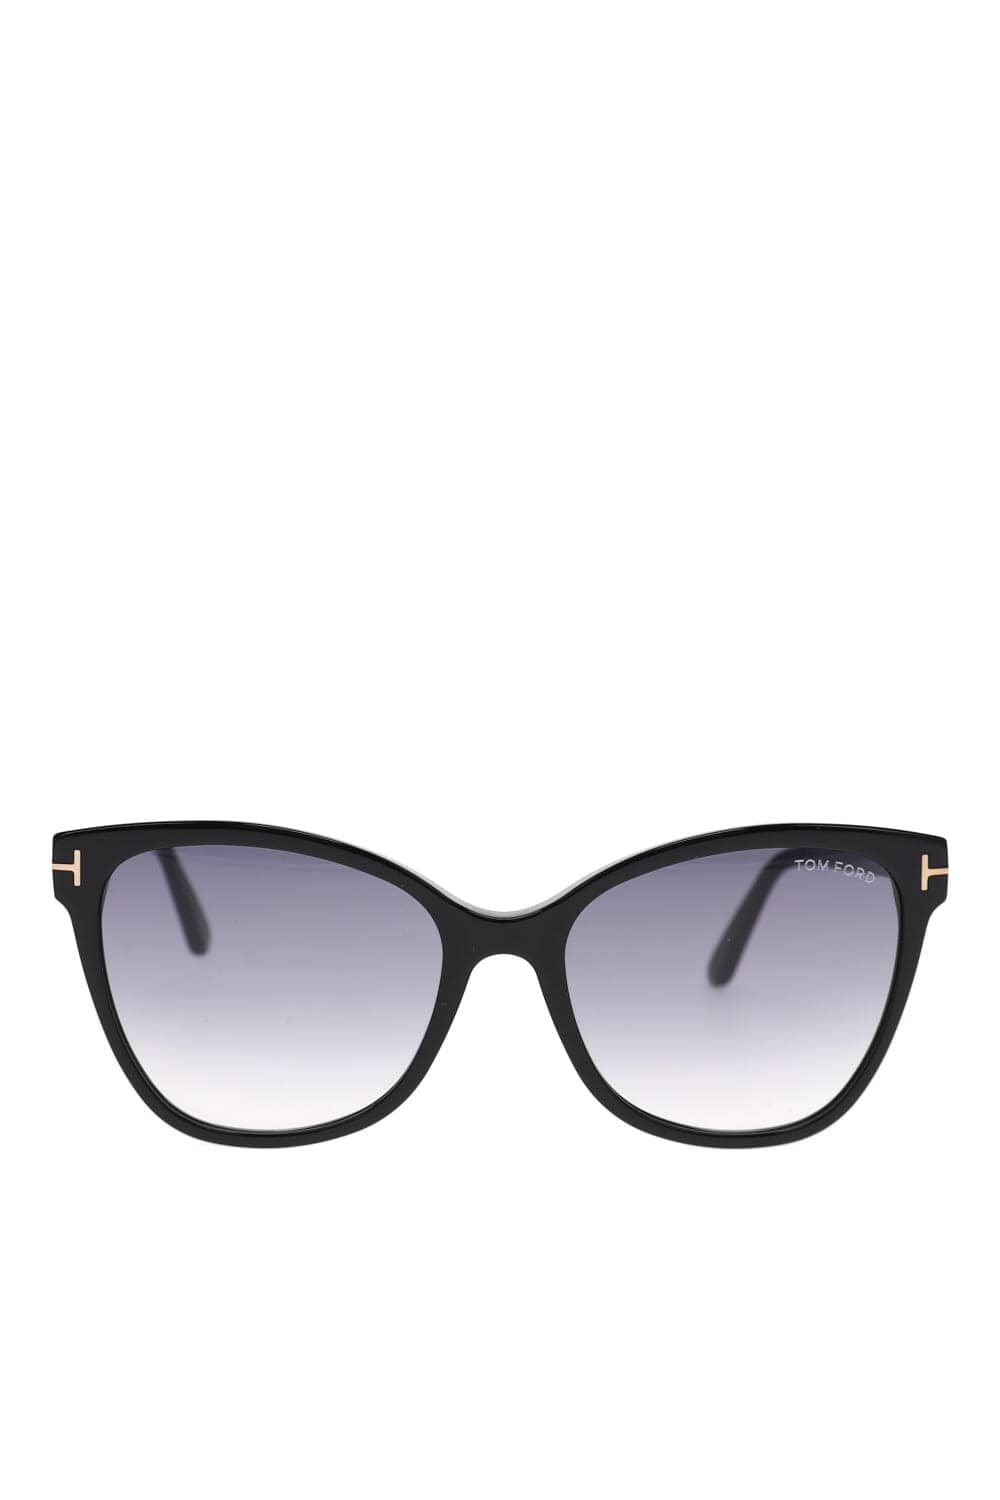 Tom Ford Eyewear FT0844 Shiny Black Smoke Sunglasses FT0844 Black/Smoke